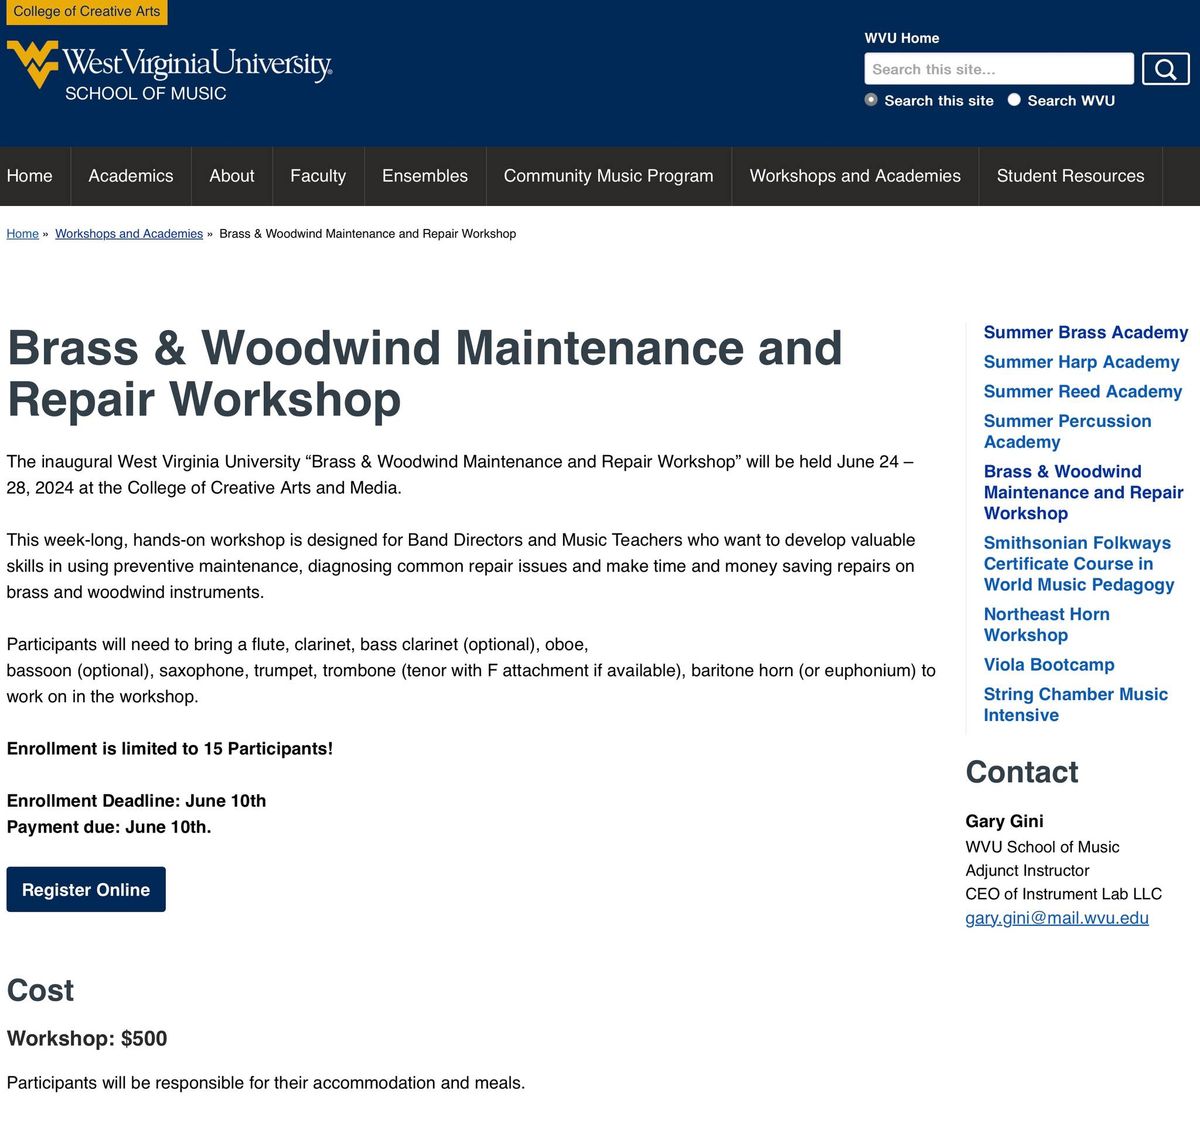 Brass & Woodwind Maintenance and Repair Workshop